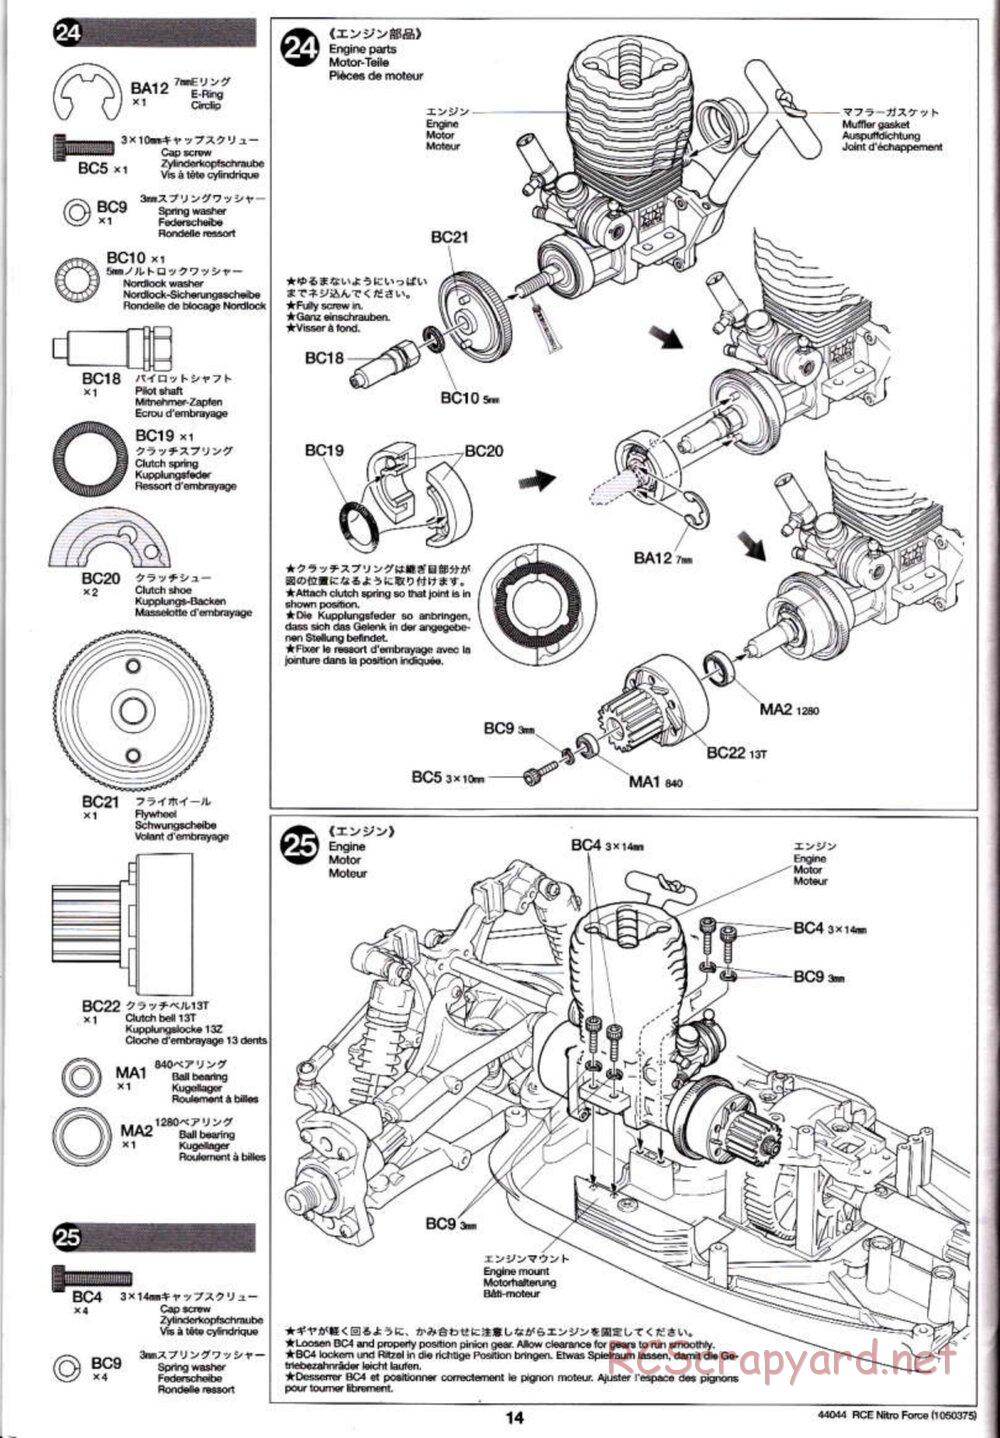 Tamiya - Nitro Force - NDF-01 Chassis - Manual - Page 14